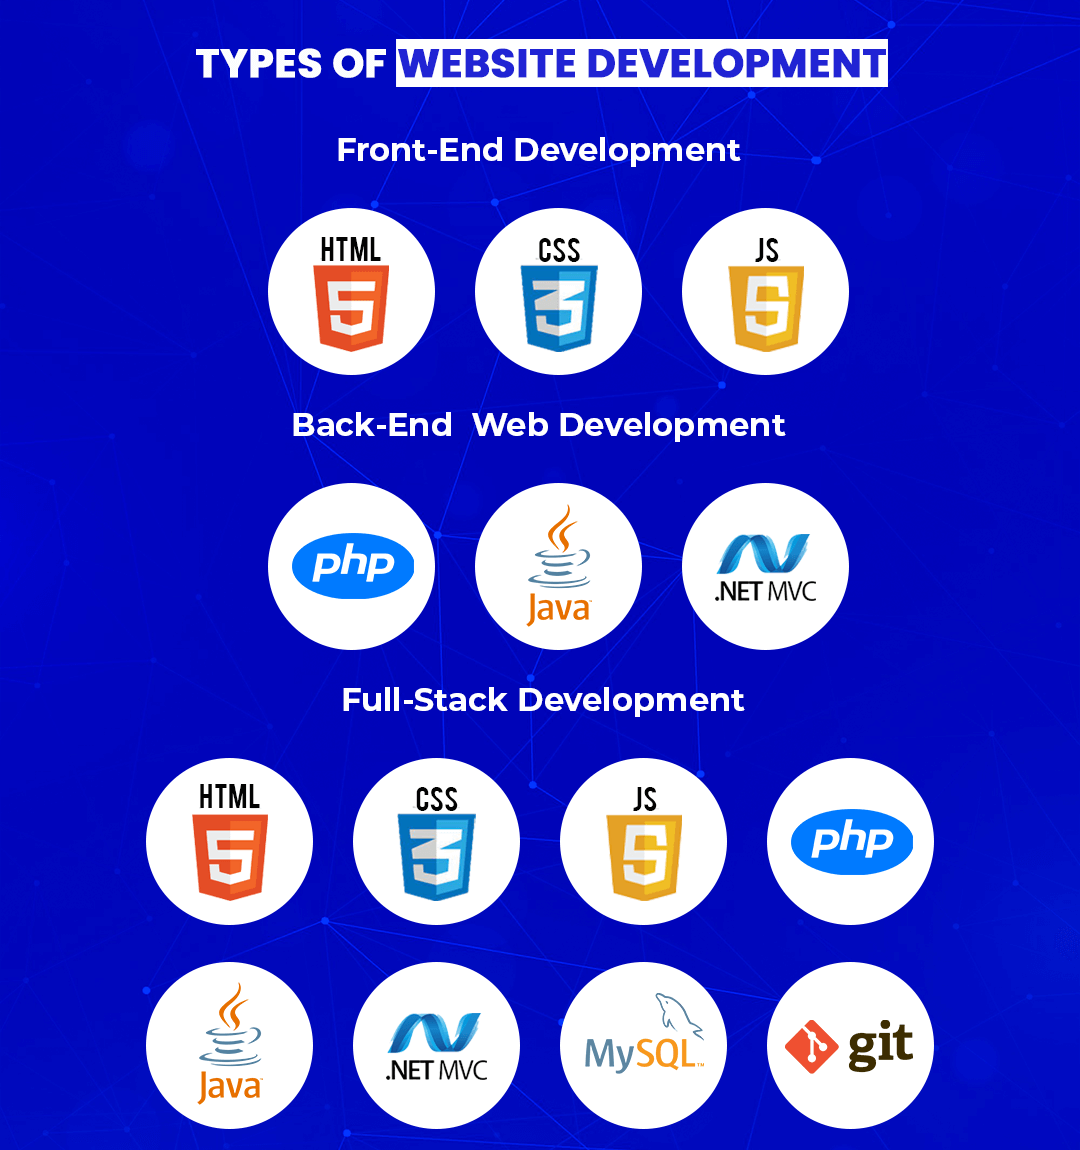 Types of Website Development